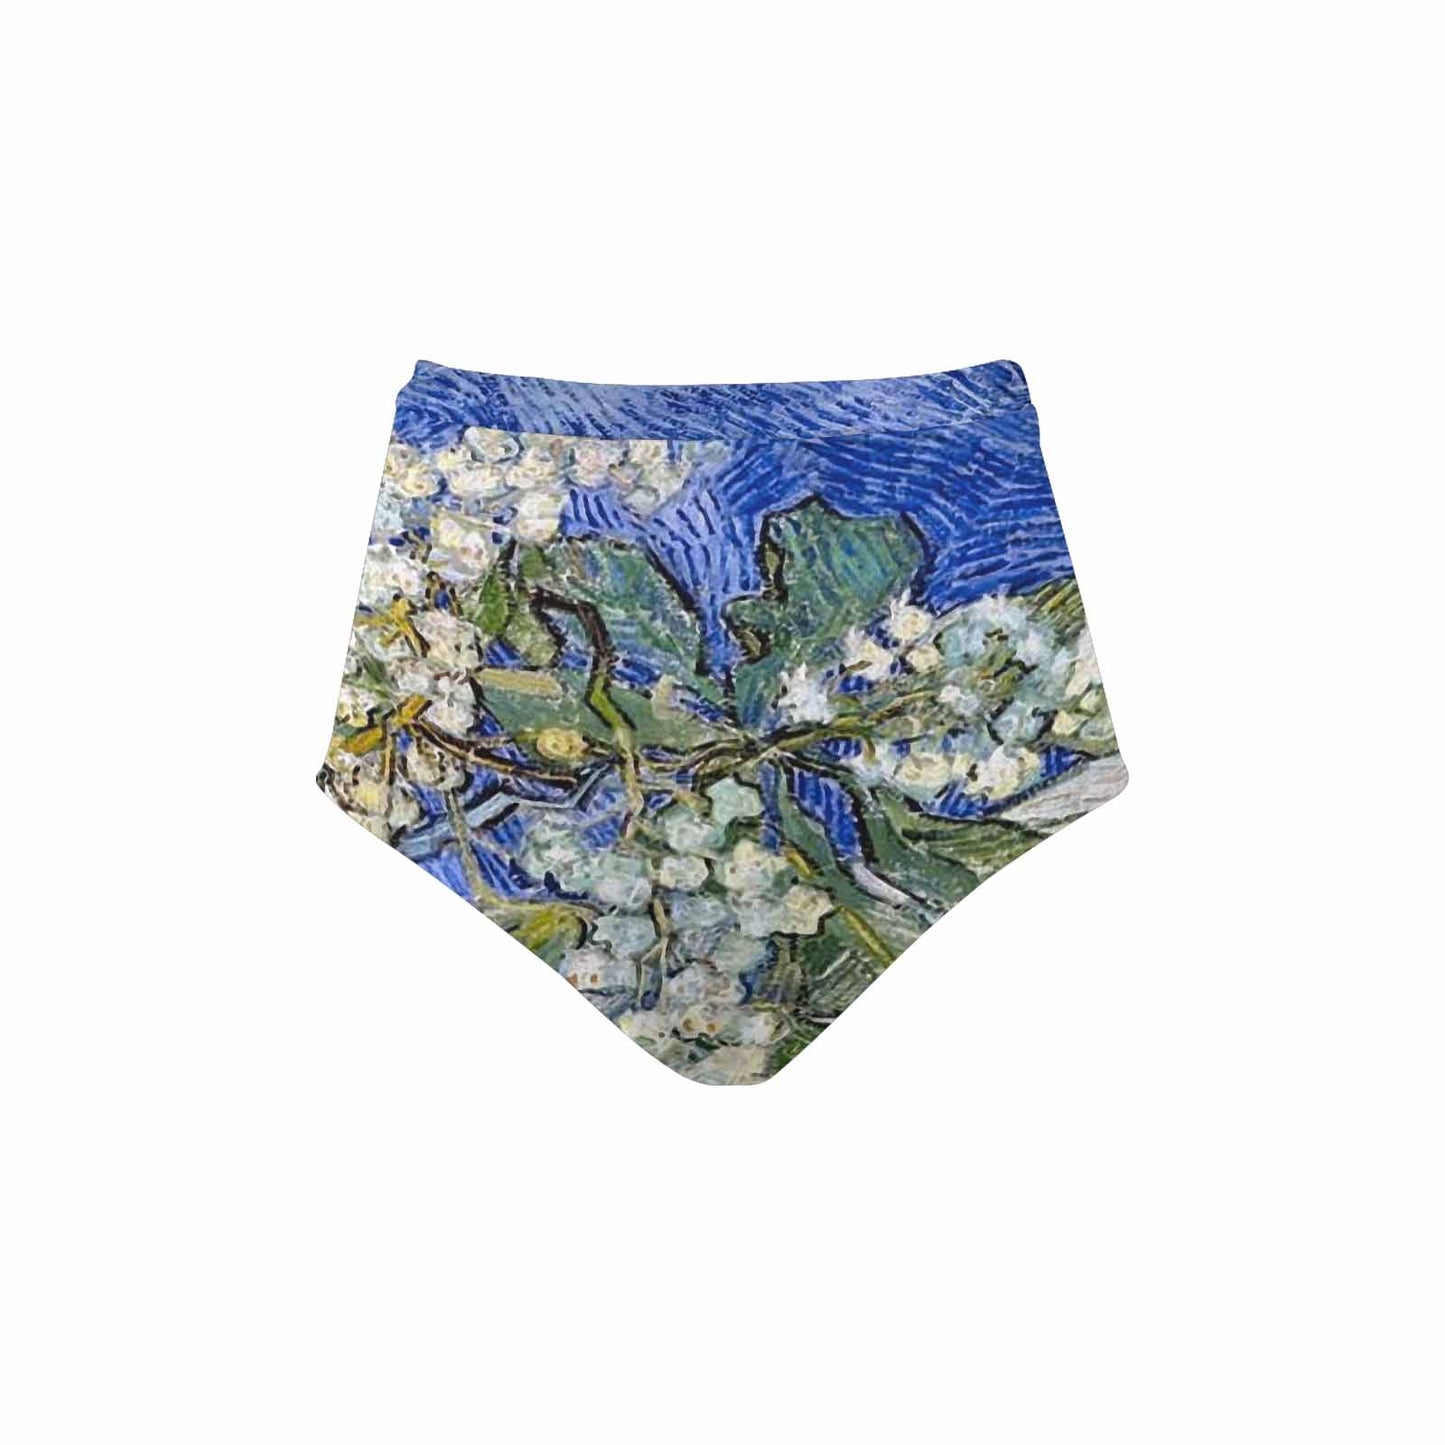 Vintage floral High waist bikini bottom, Design 04